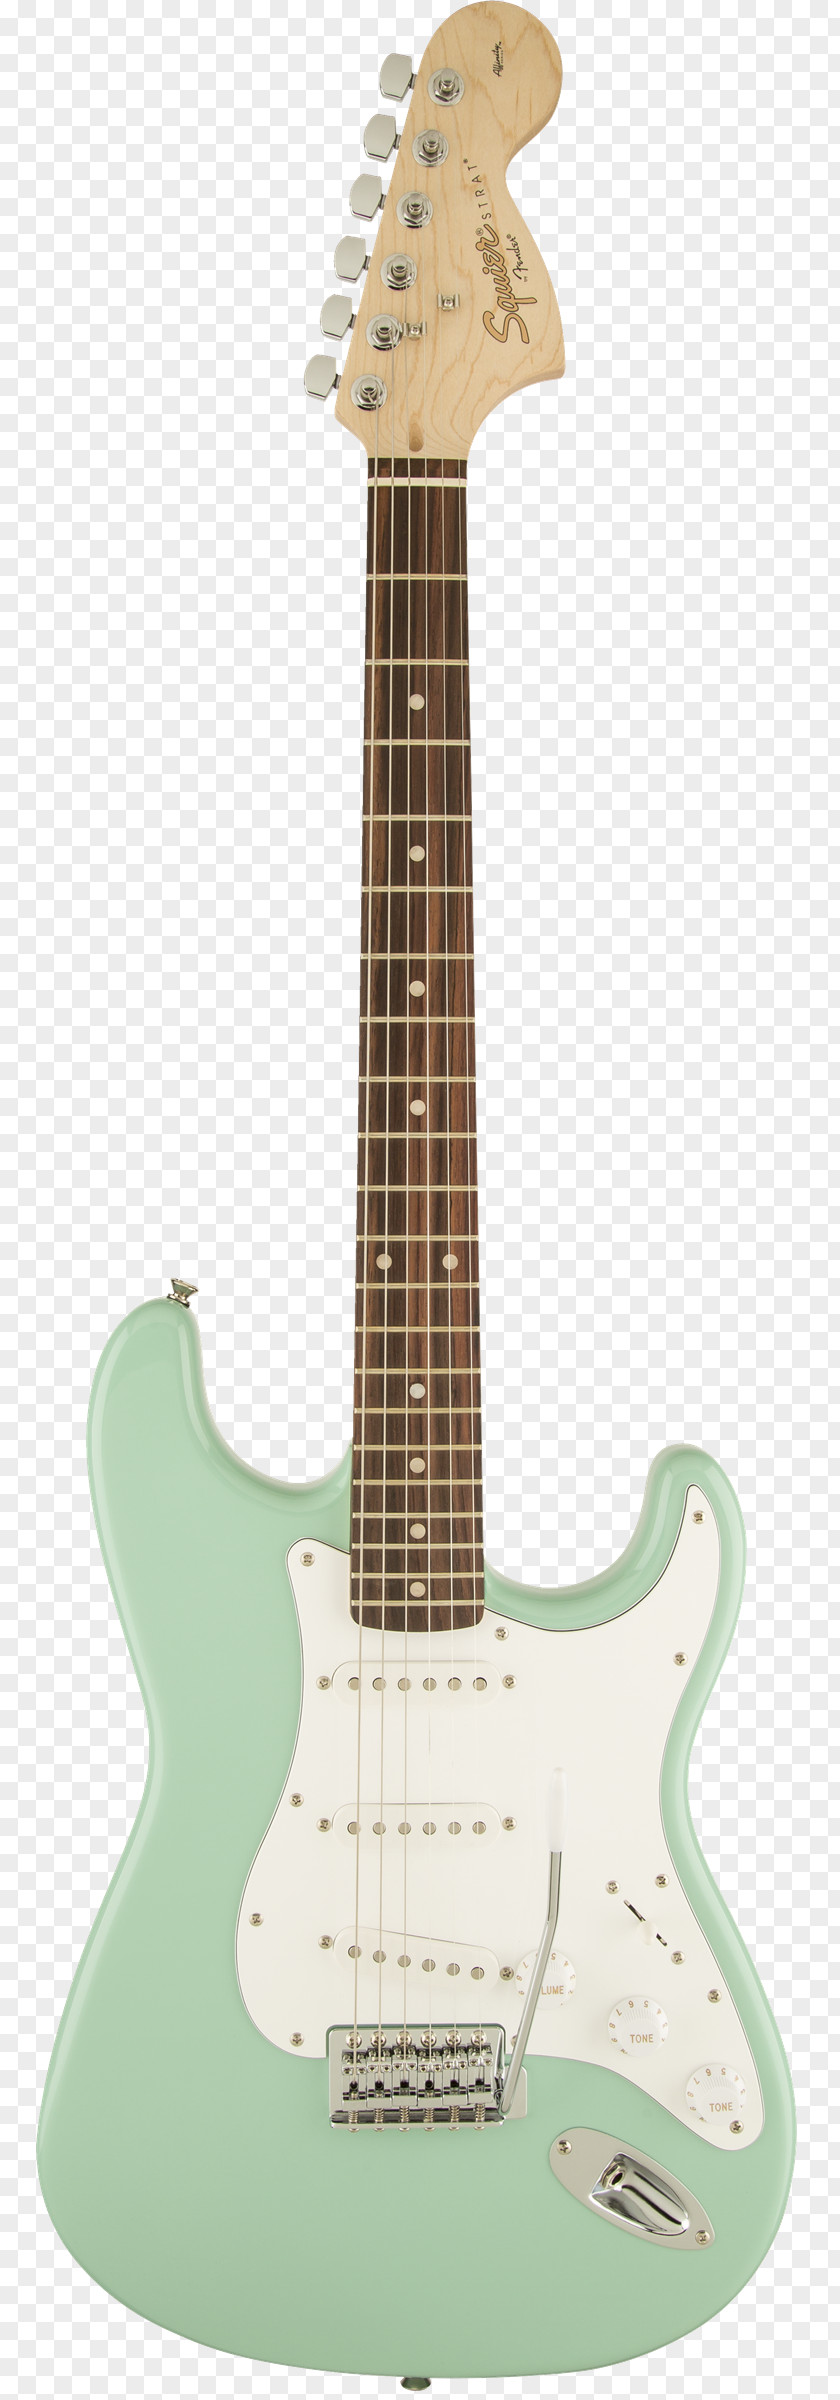 Electric Guitar Fender Stratocaster Squier Deluxe Hot Rails Precision Bass Jaguar PNG